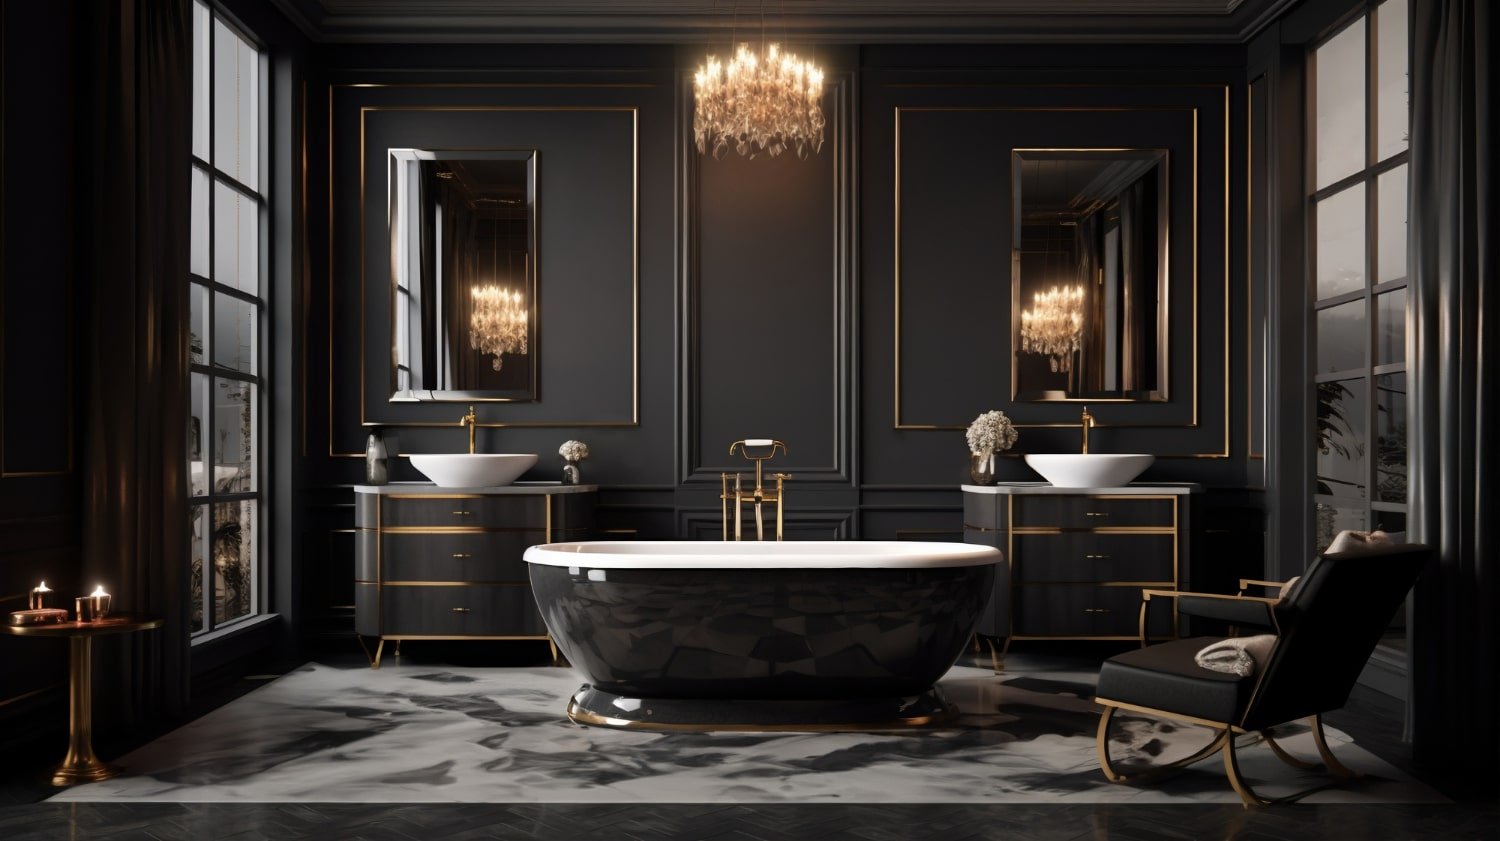 VictoriaPlum Bathroom Redesign Trends for a Luxe Look